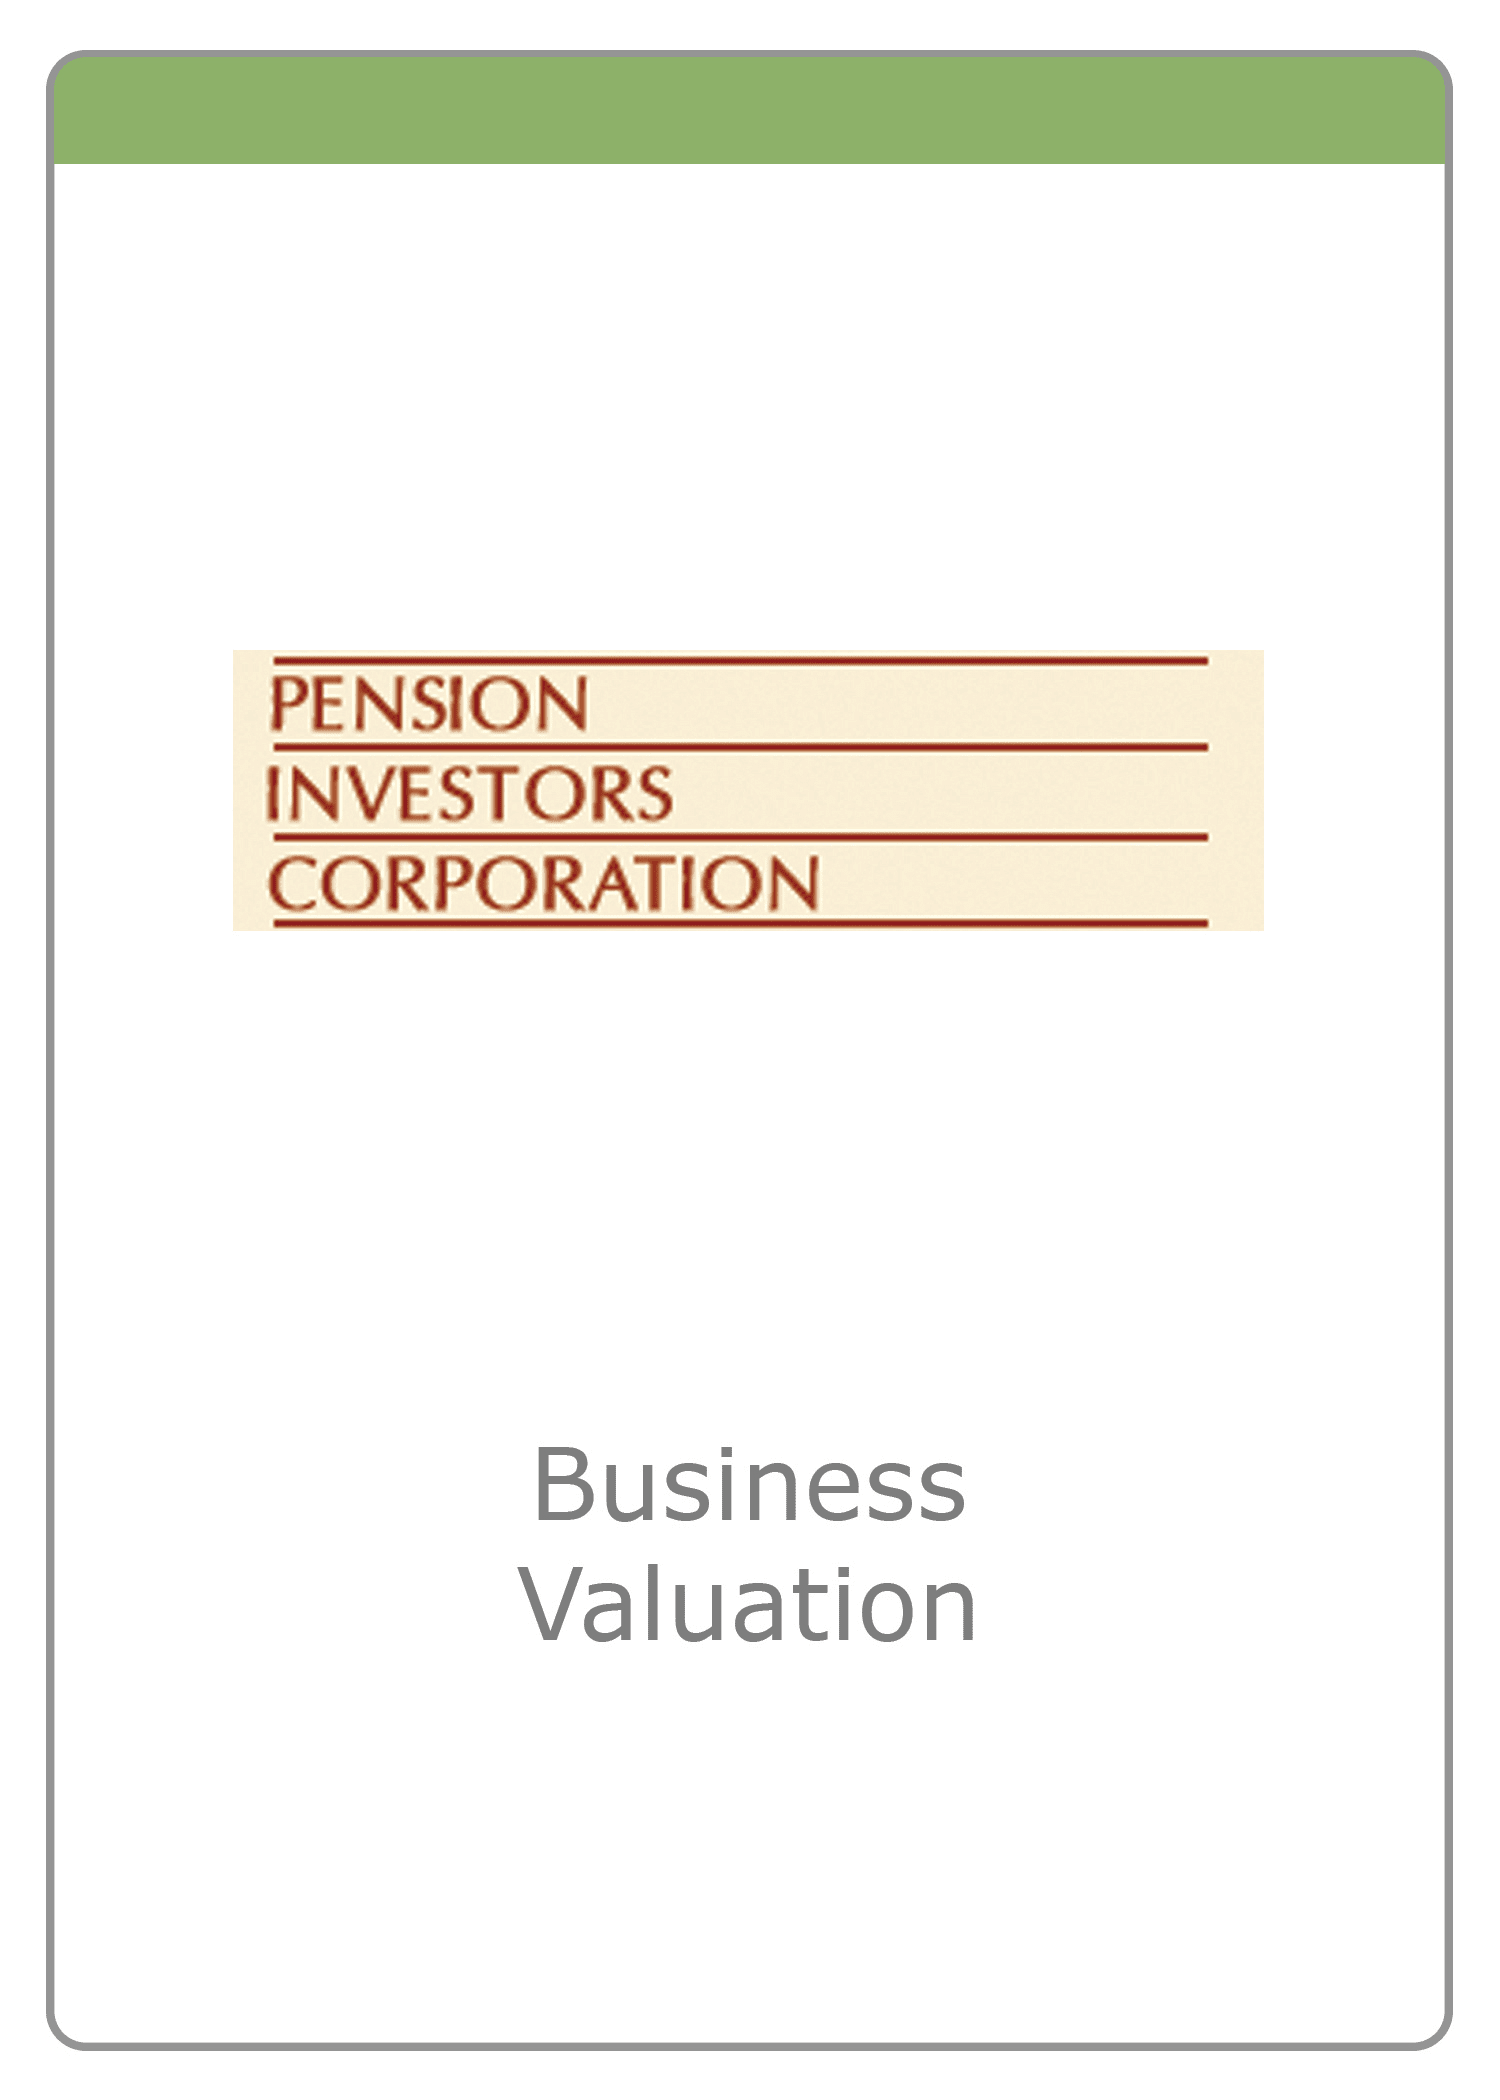 Pension Investors ESOP - The McLean Group